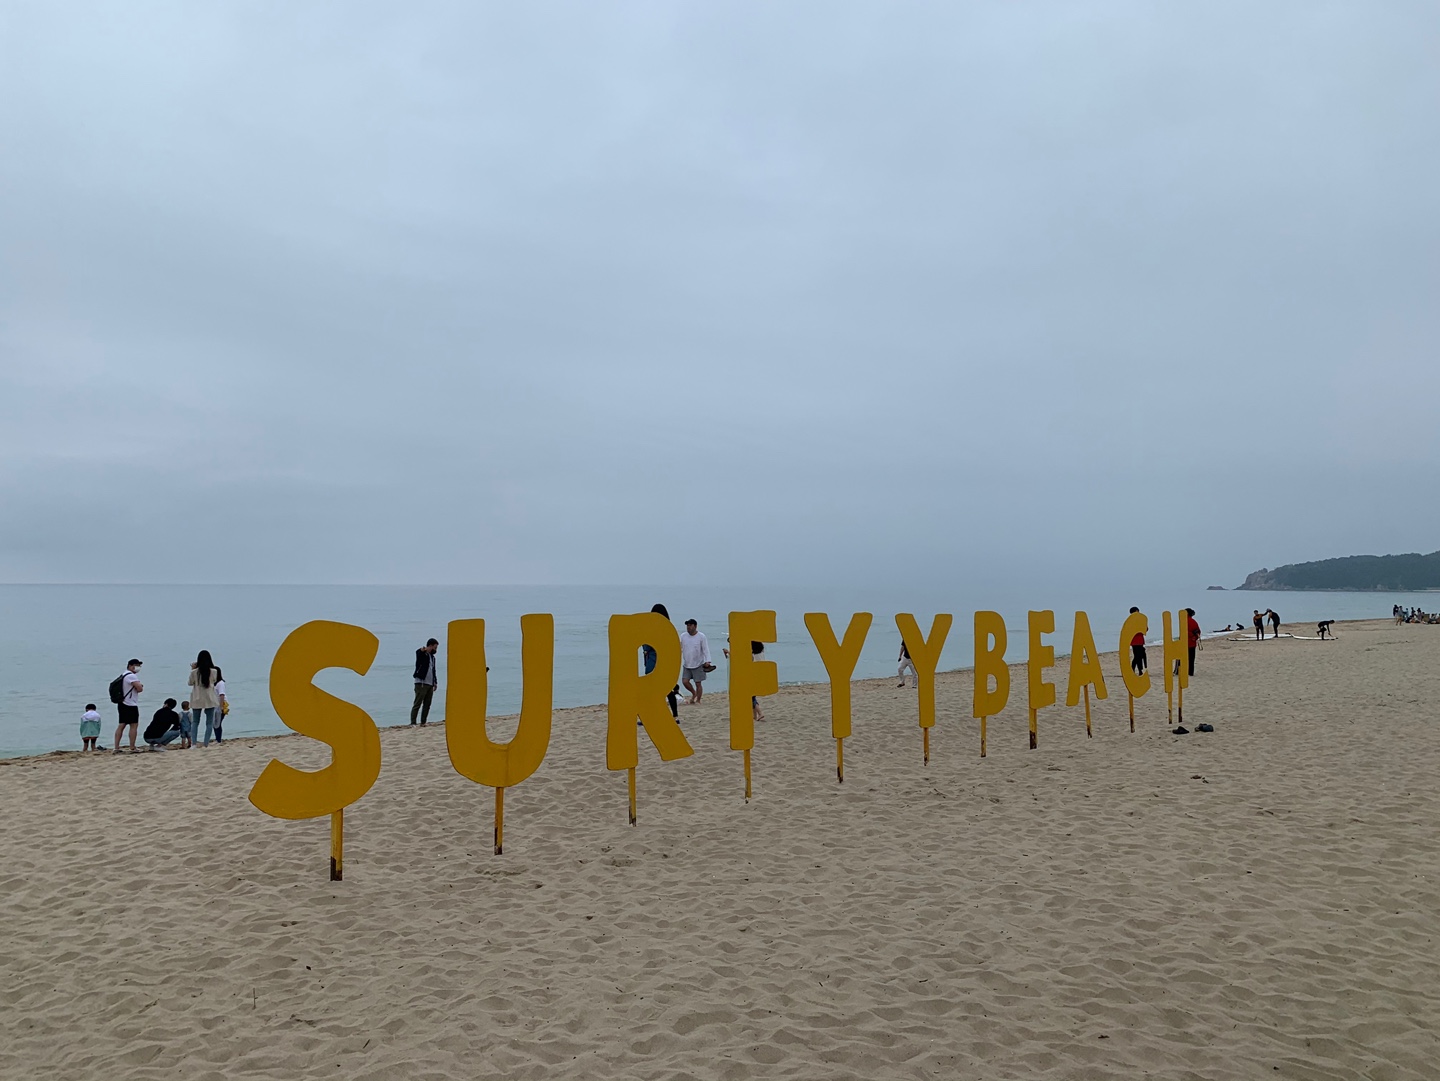 SURFYY BEACH 포토존